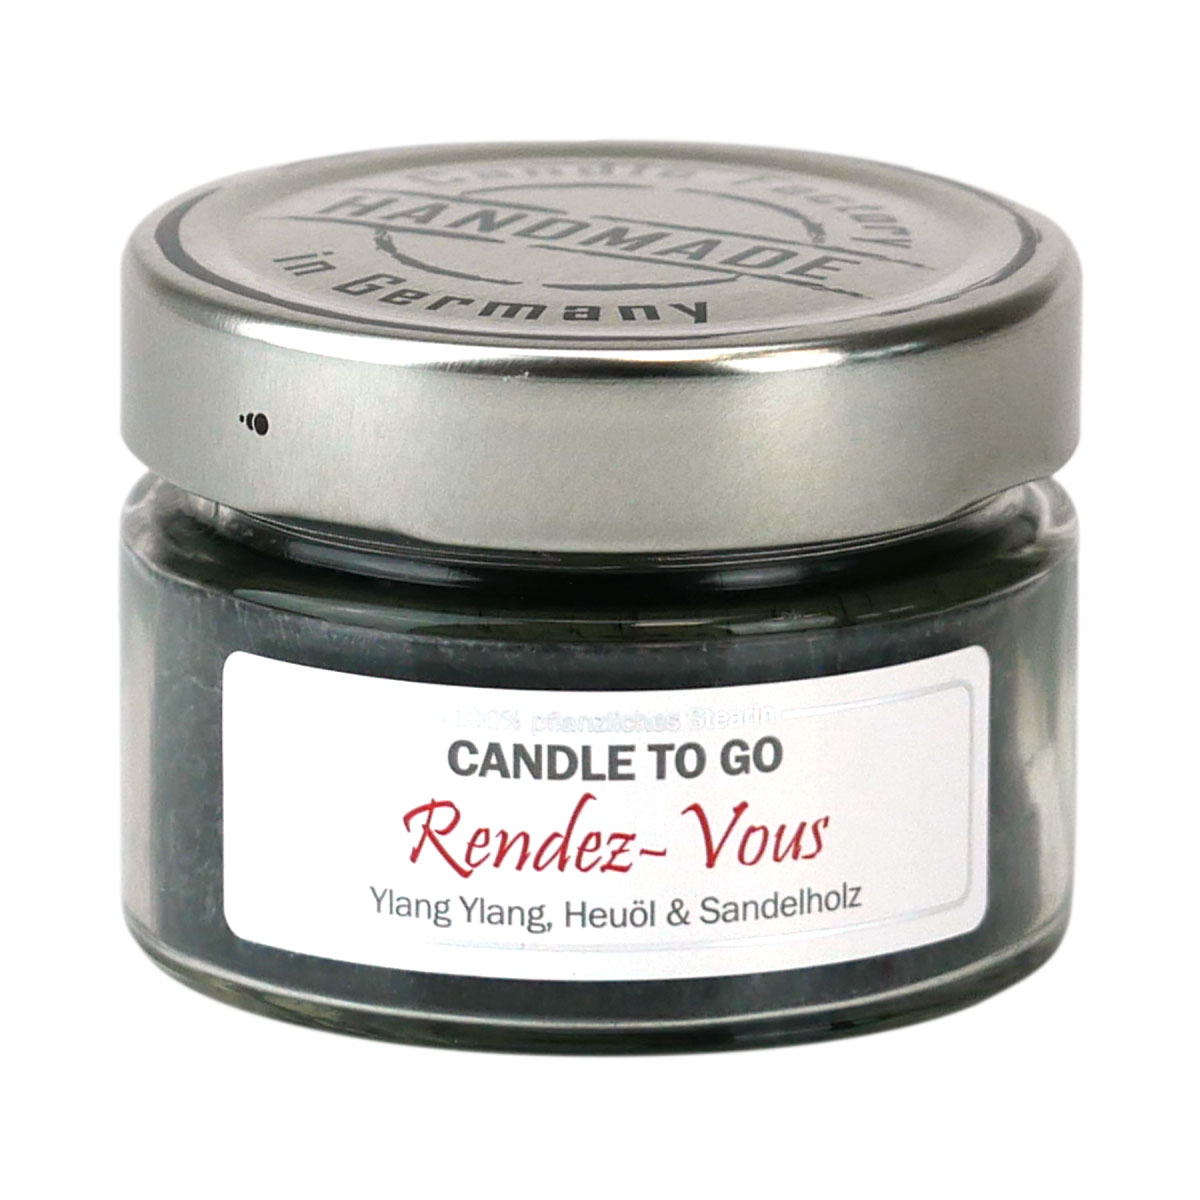 Rendez Vous - Candle to Go Duftkerze von Candle Factory